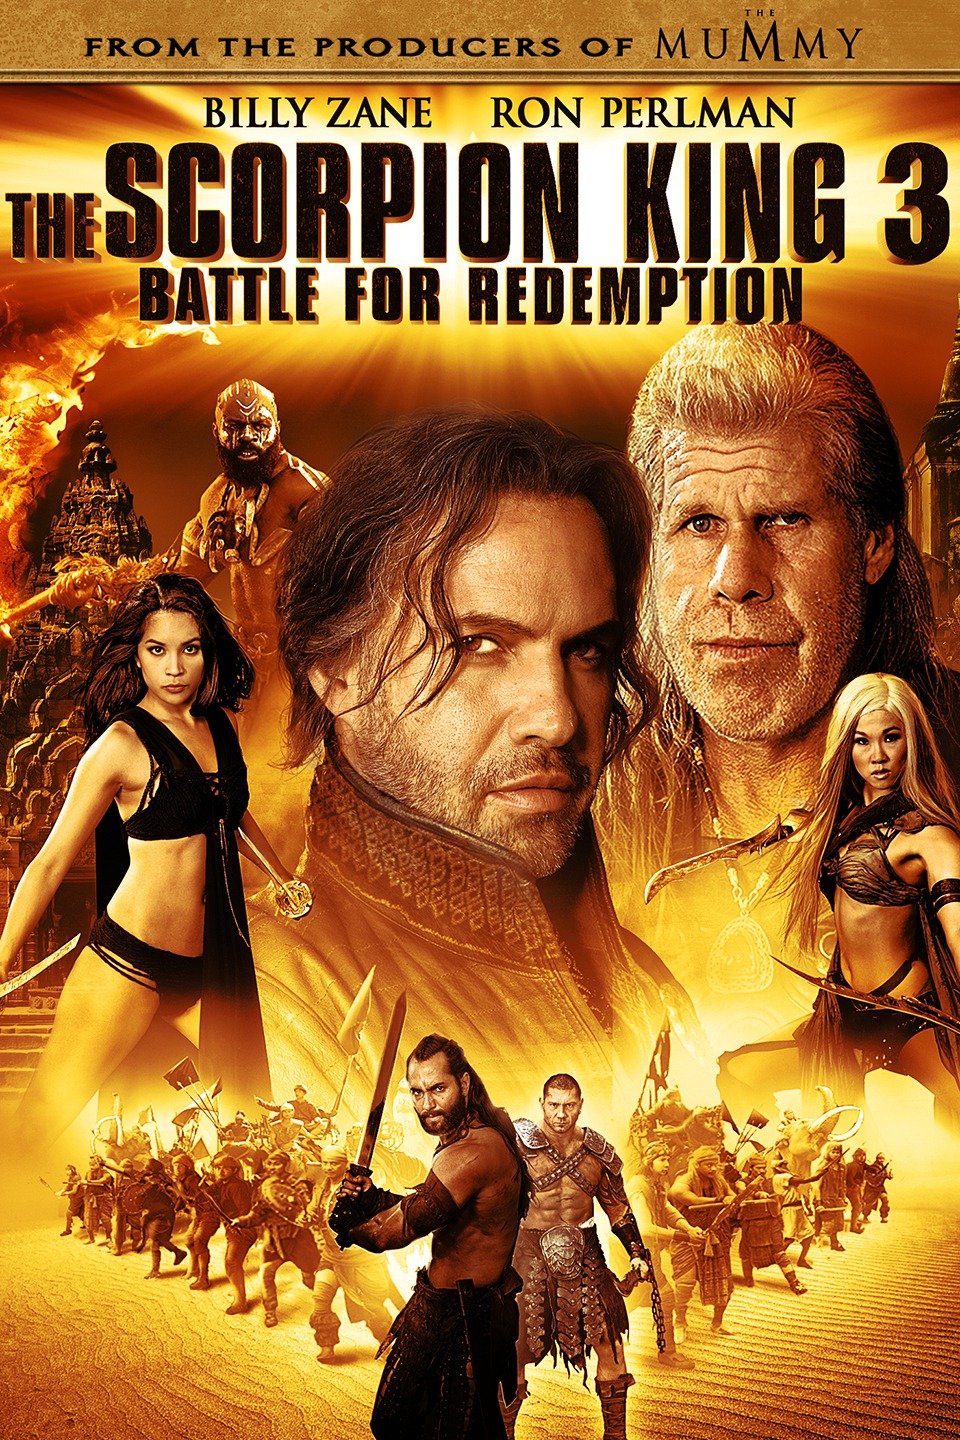 [MINI Super-HQ] The Scorpion King 3: Battle for Redemption (2012) สงครามแค้นกู้บัลลังก์เดือด ภาค 3 [1080p]  [พากย์ไทย 5.1 + เสียงอังกฤษ DTS] [บรรยายไทย + อังกฤษ] [เสียงไทย + ซับไทย] [OPENLOAD]